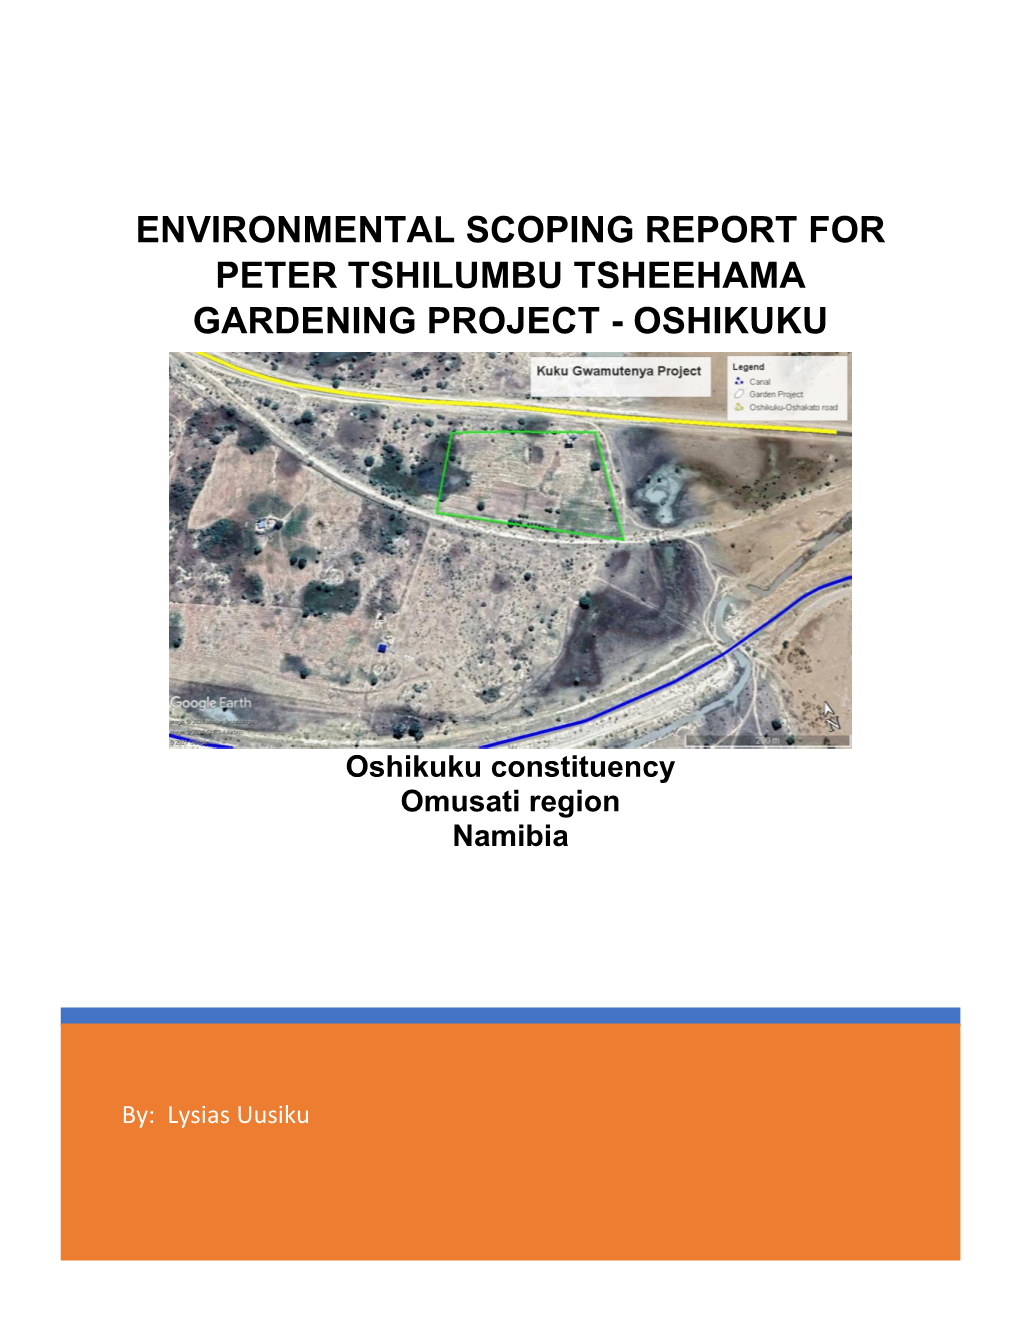 Environmental Scoping Report for Peter Tshilumbu Tsheehama Gardening Project - Oshikuku